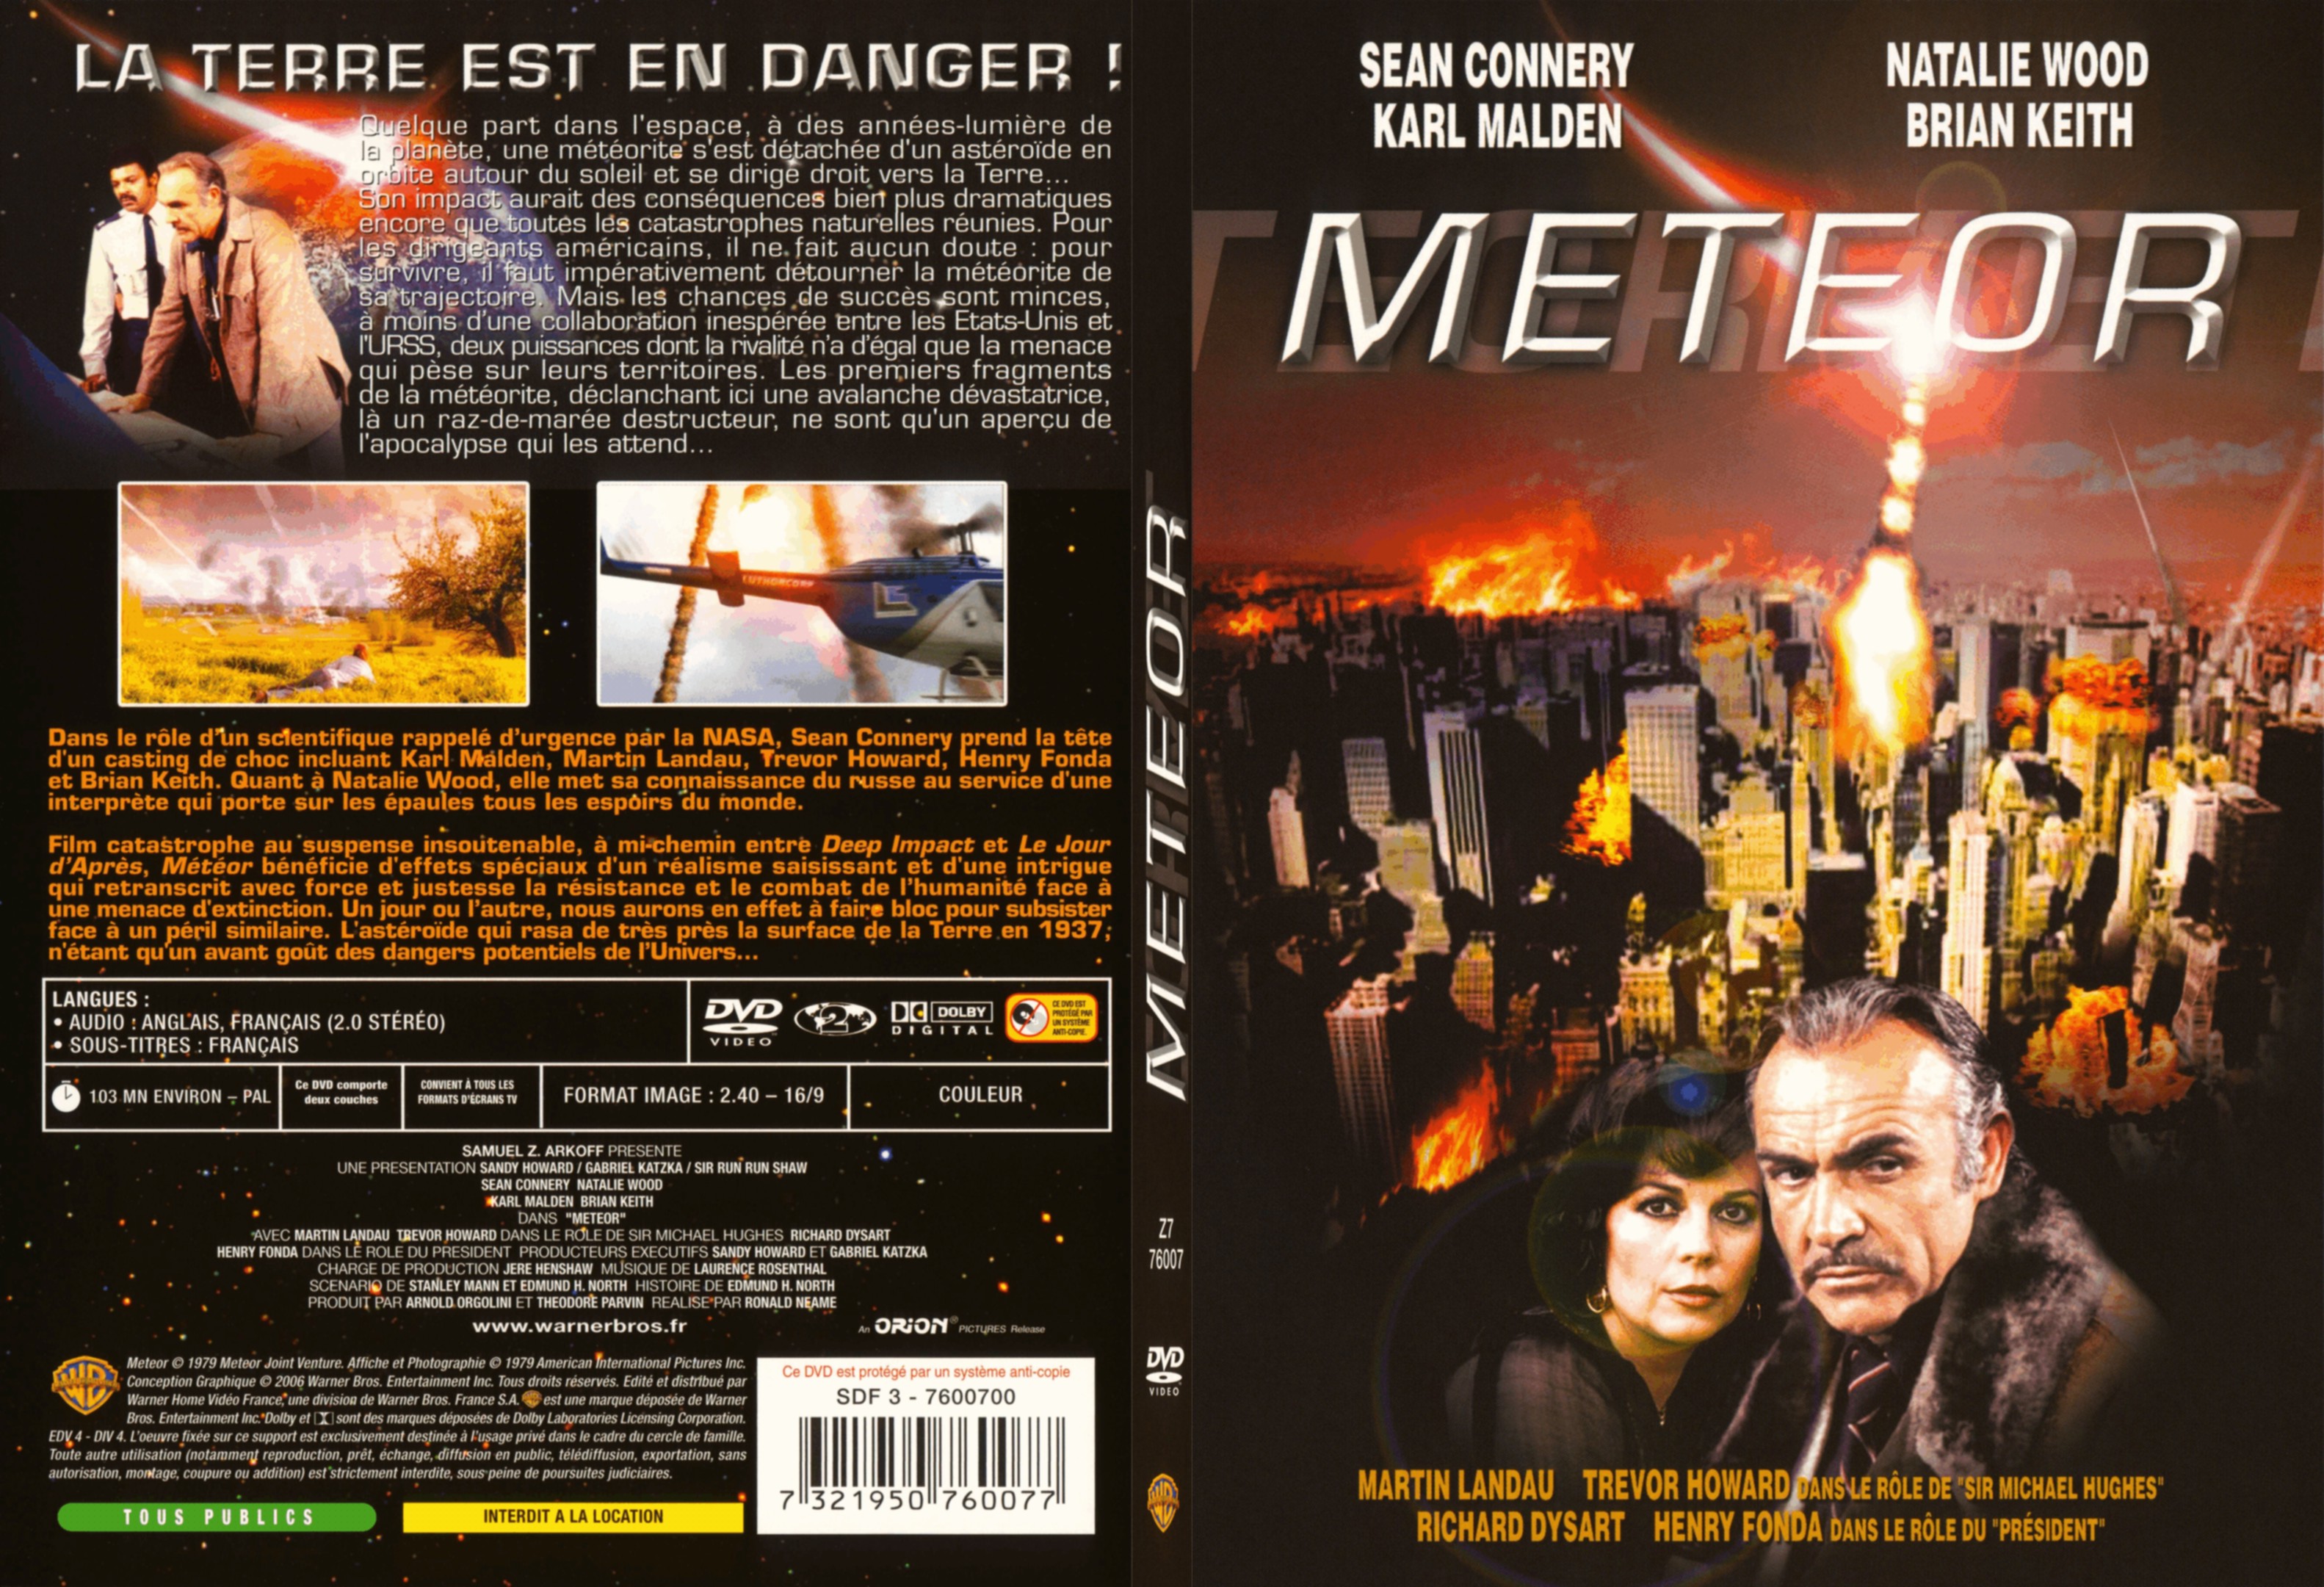 Jaquette DVD Meteor - SLIM